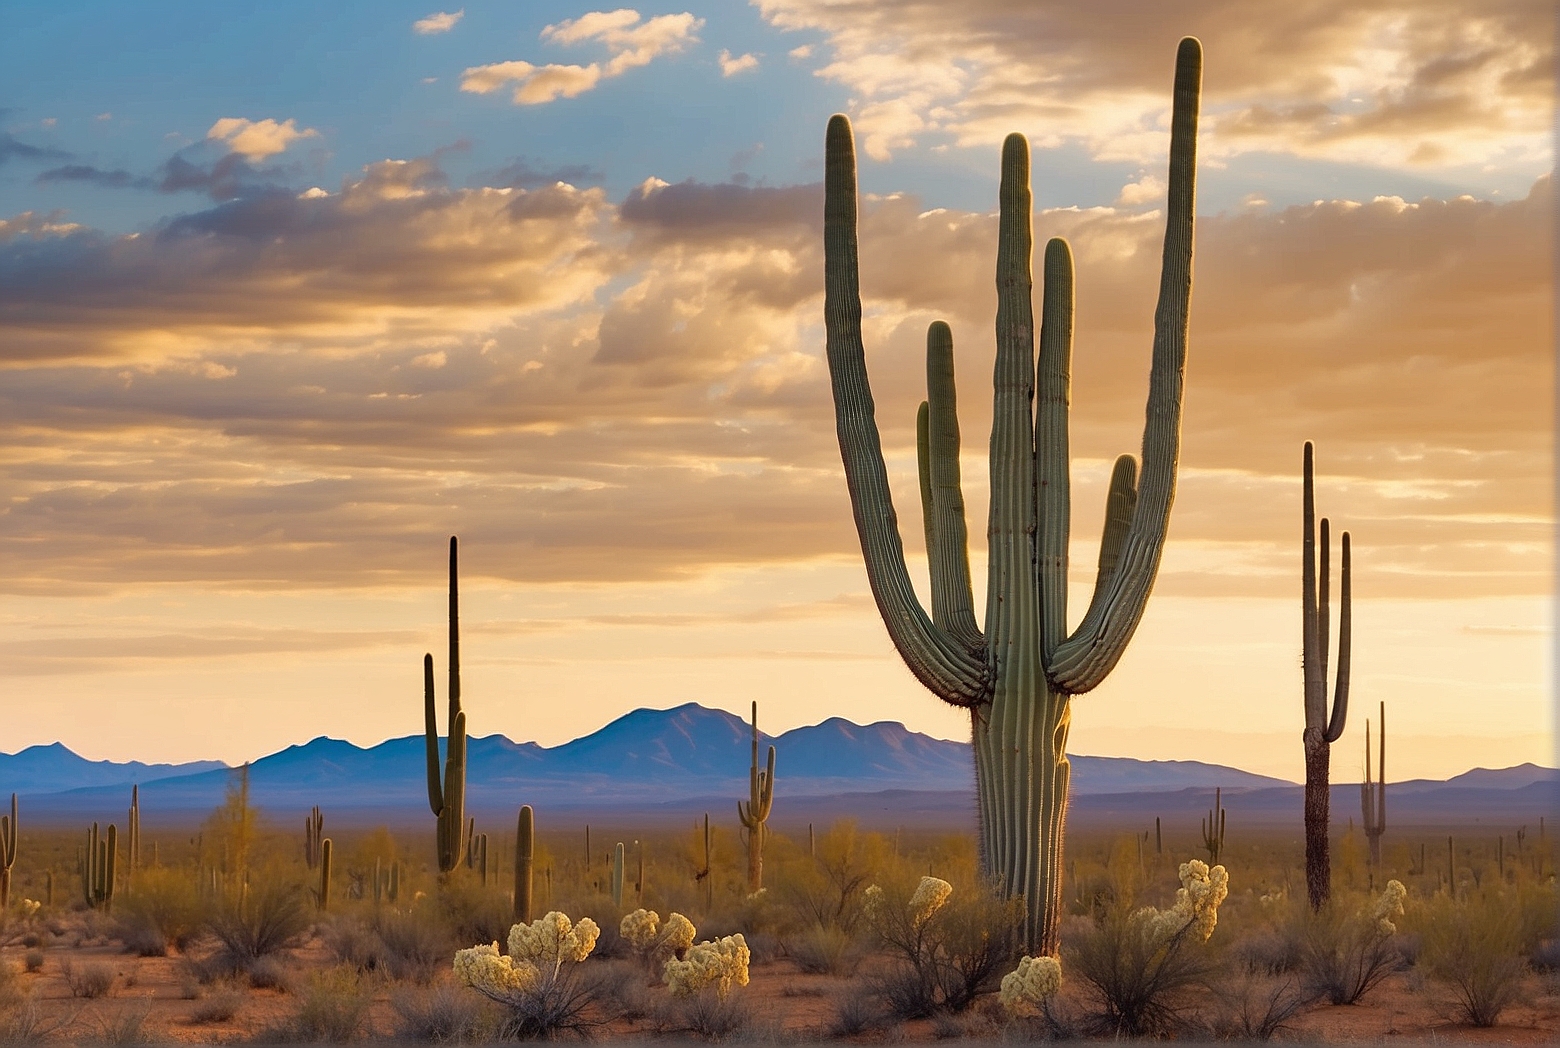 Are Saguaro Cactus Protected in Arizona